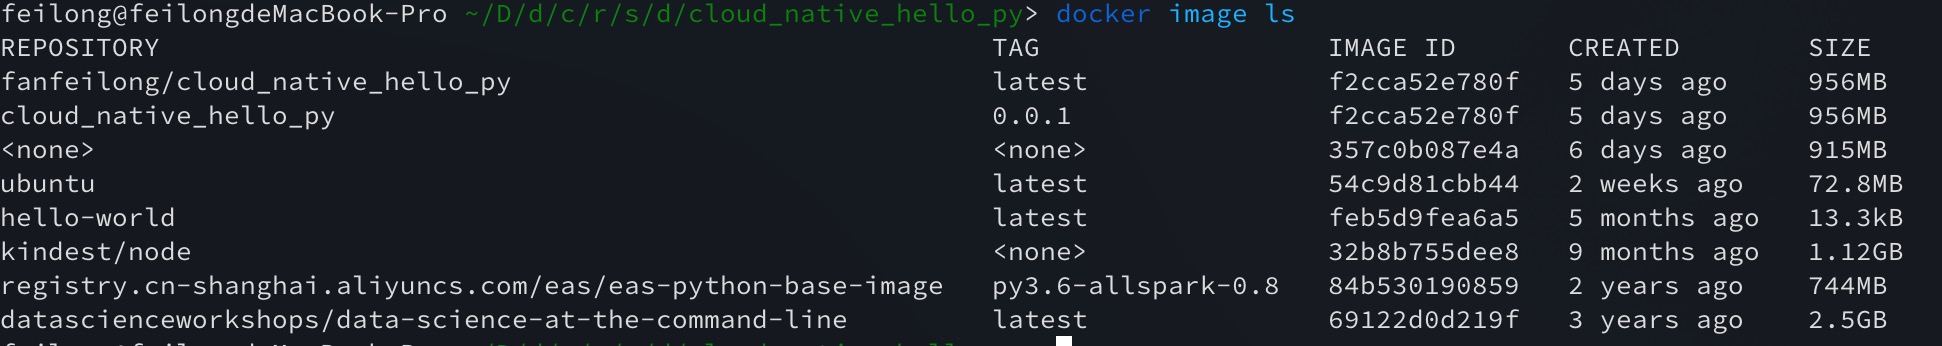 data/1.云原生初阶/1.容器(docker)/4.使用Dockerfile制作镜像/build_image_tag.jpg